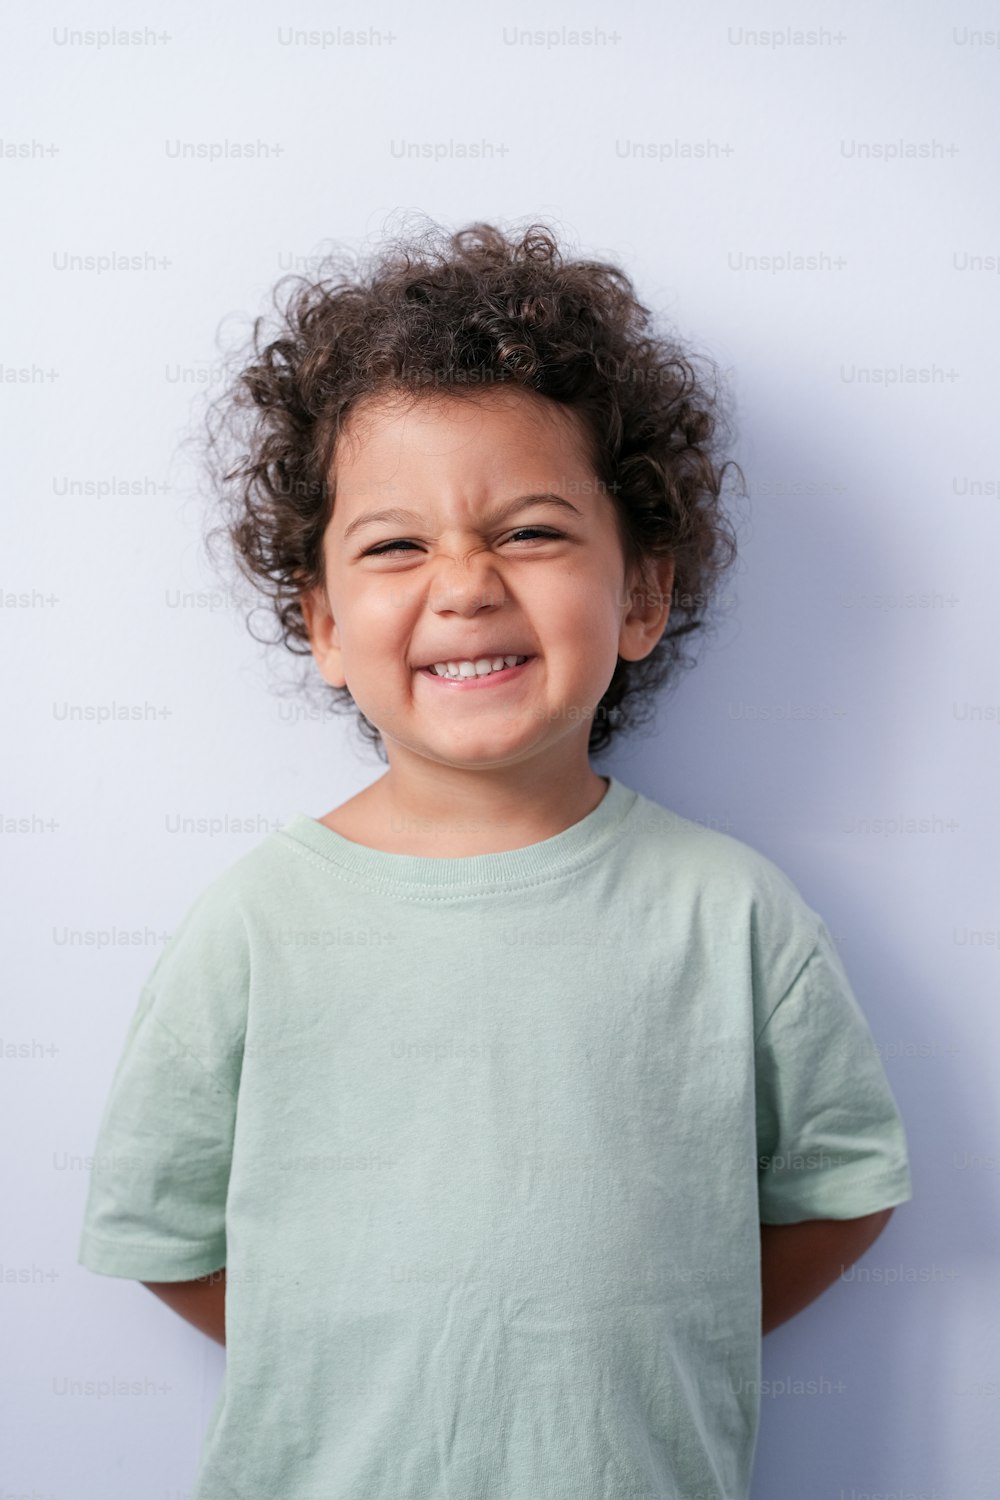 Un niño pequeño con cabello rizado está sonriendo